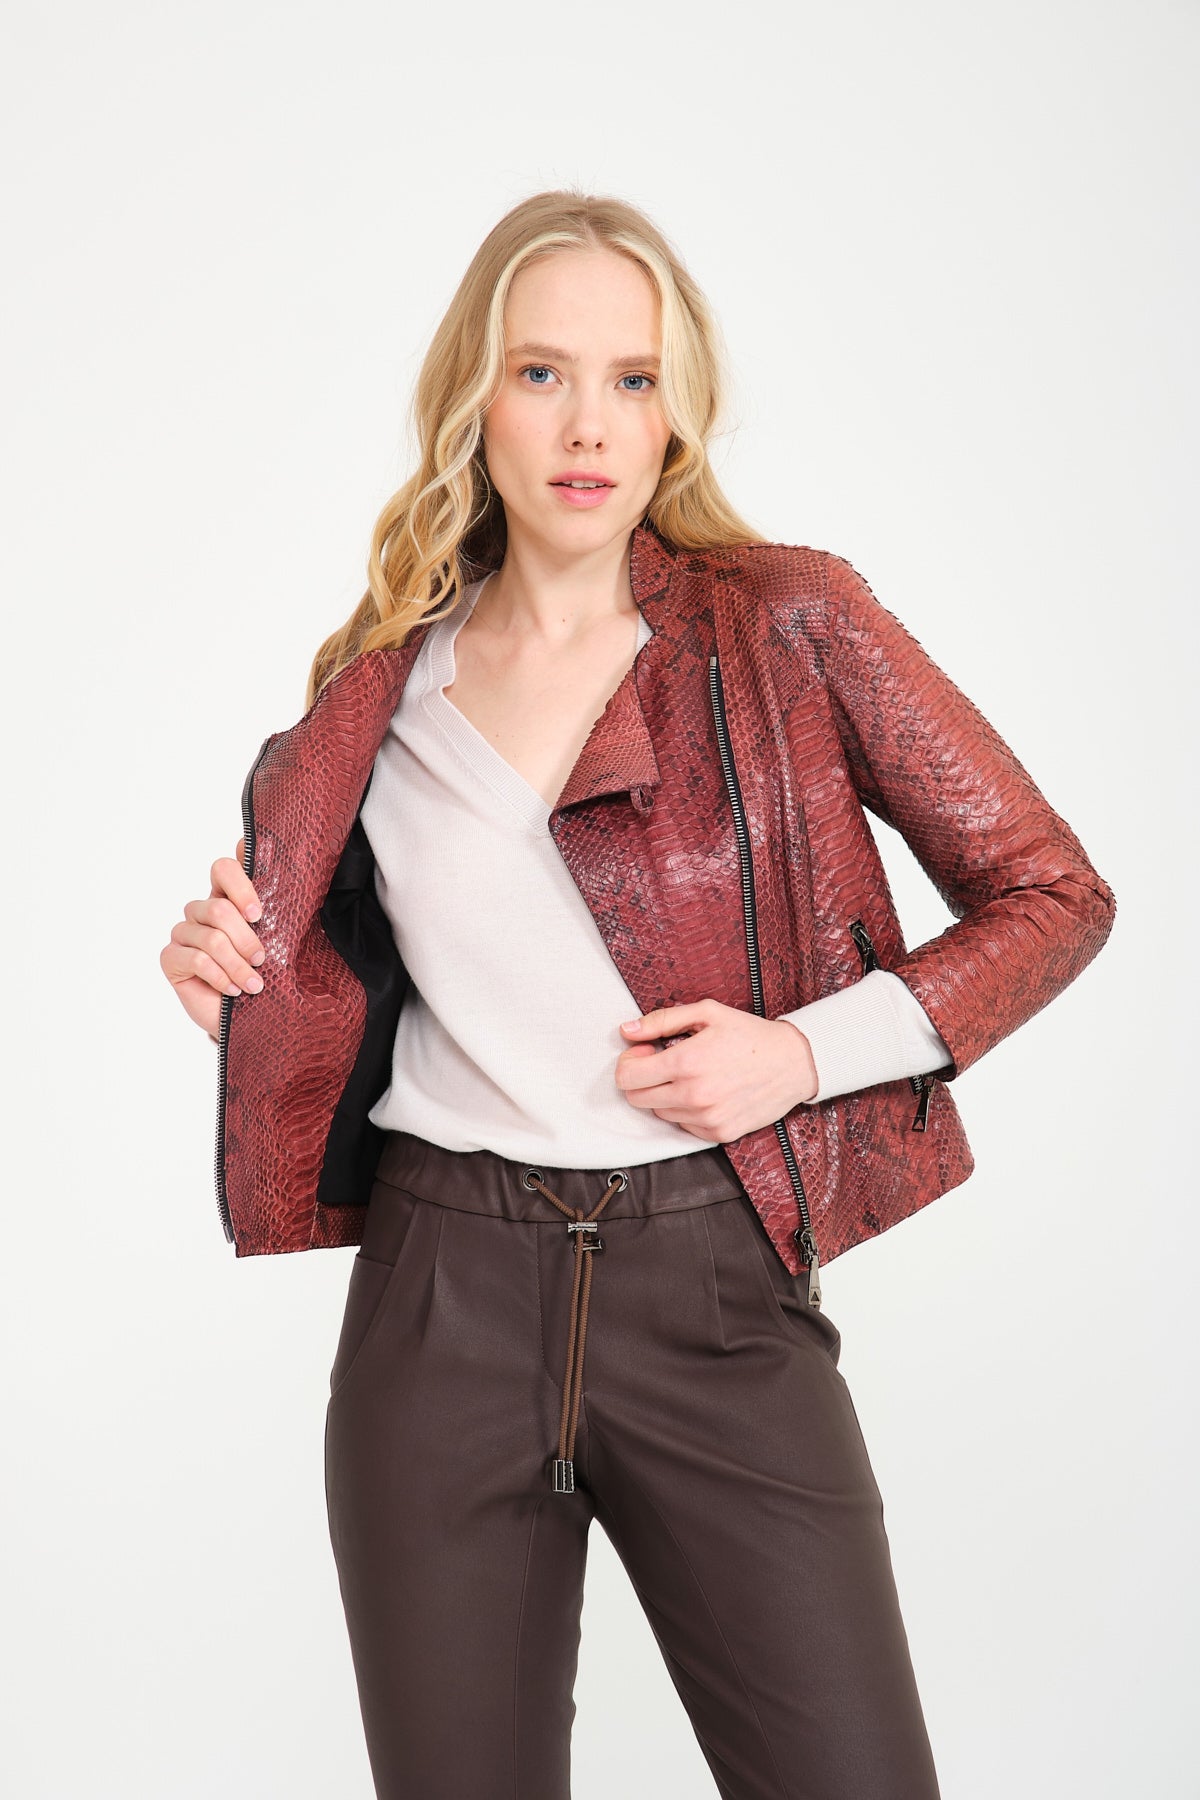 Burgundy Python Leather Jacket